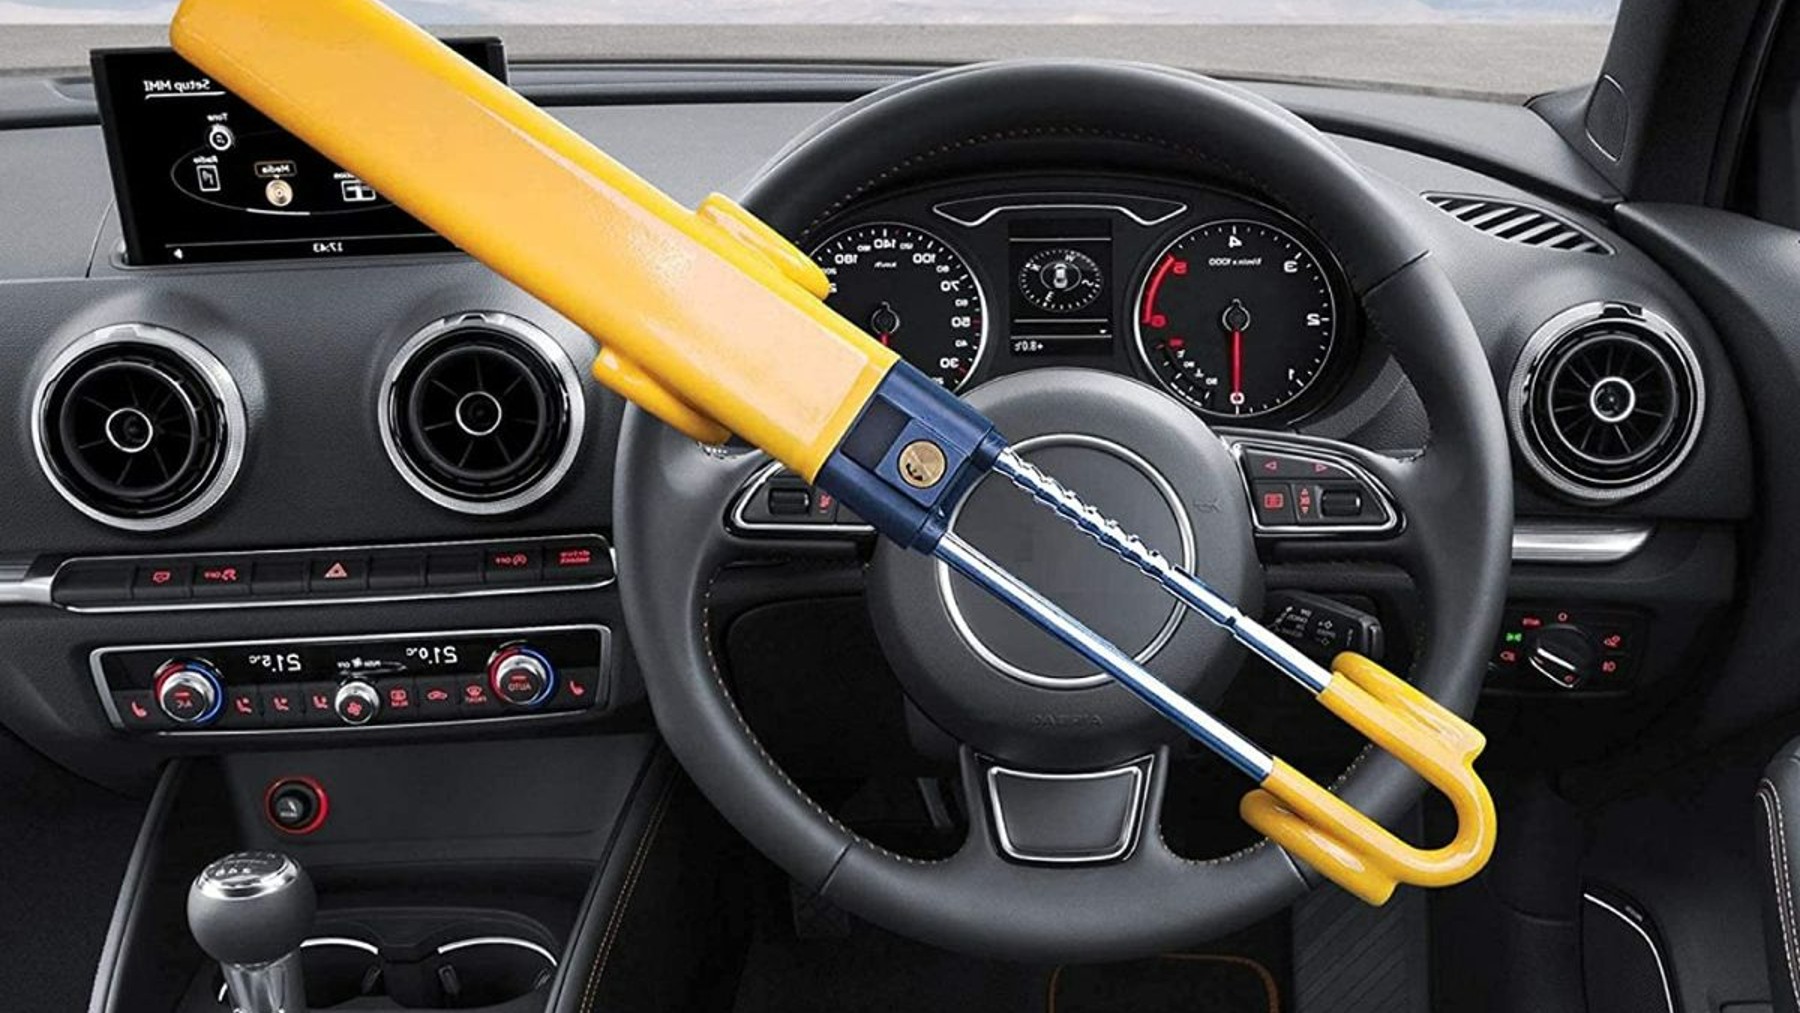 Las barras antirrobo perfectas para proteger tu coche